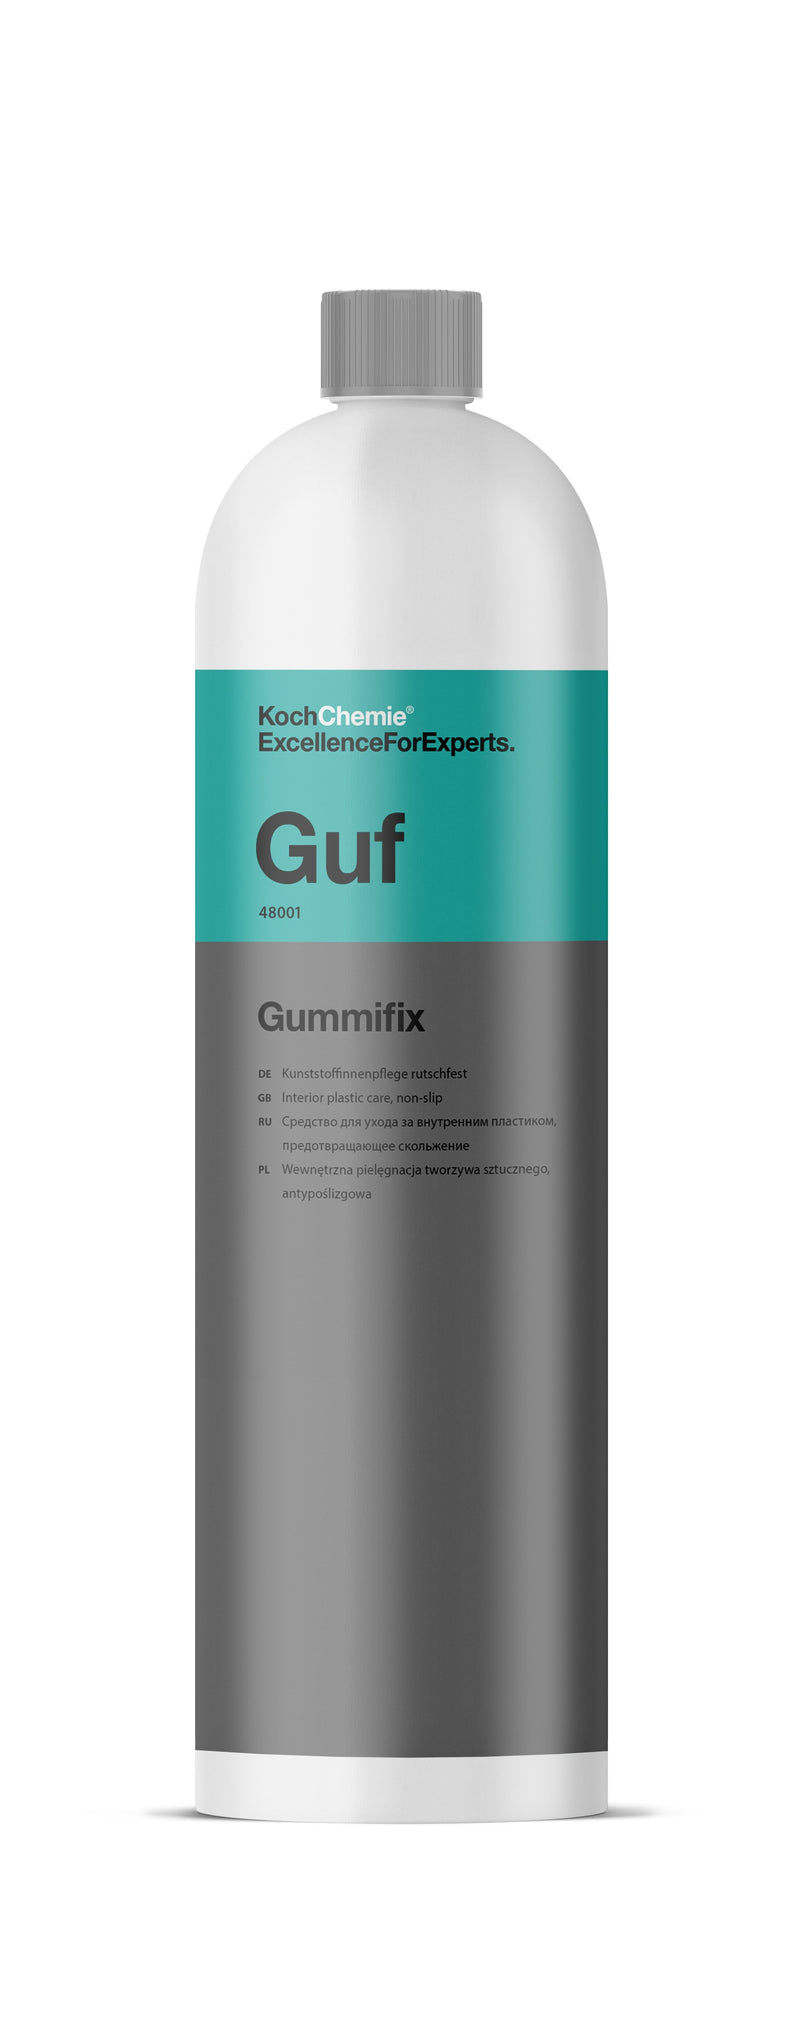 Koch Chemie Guf Gummifix Interior Plastic Care,Non-Slip 1L